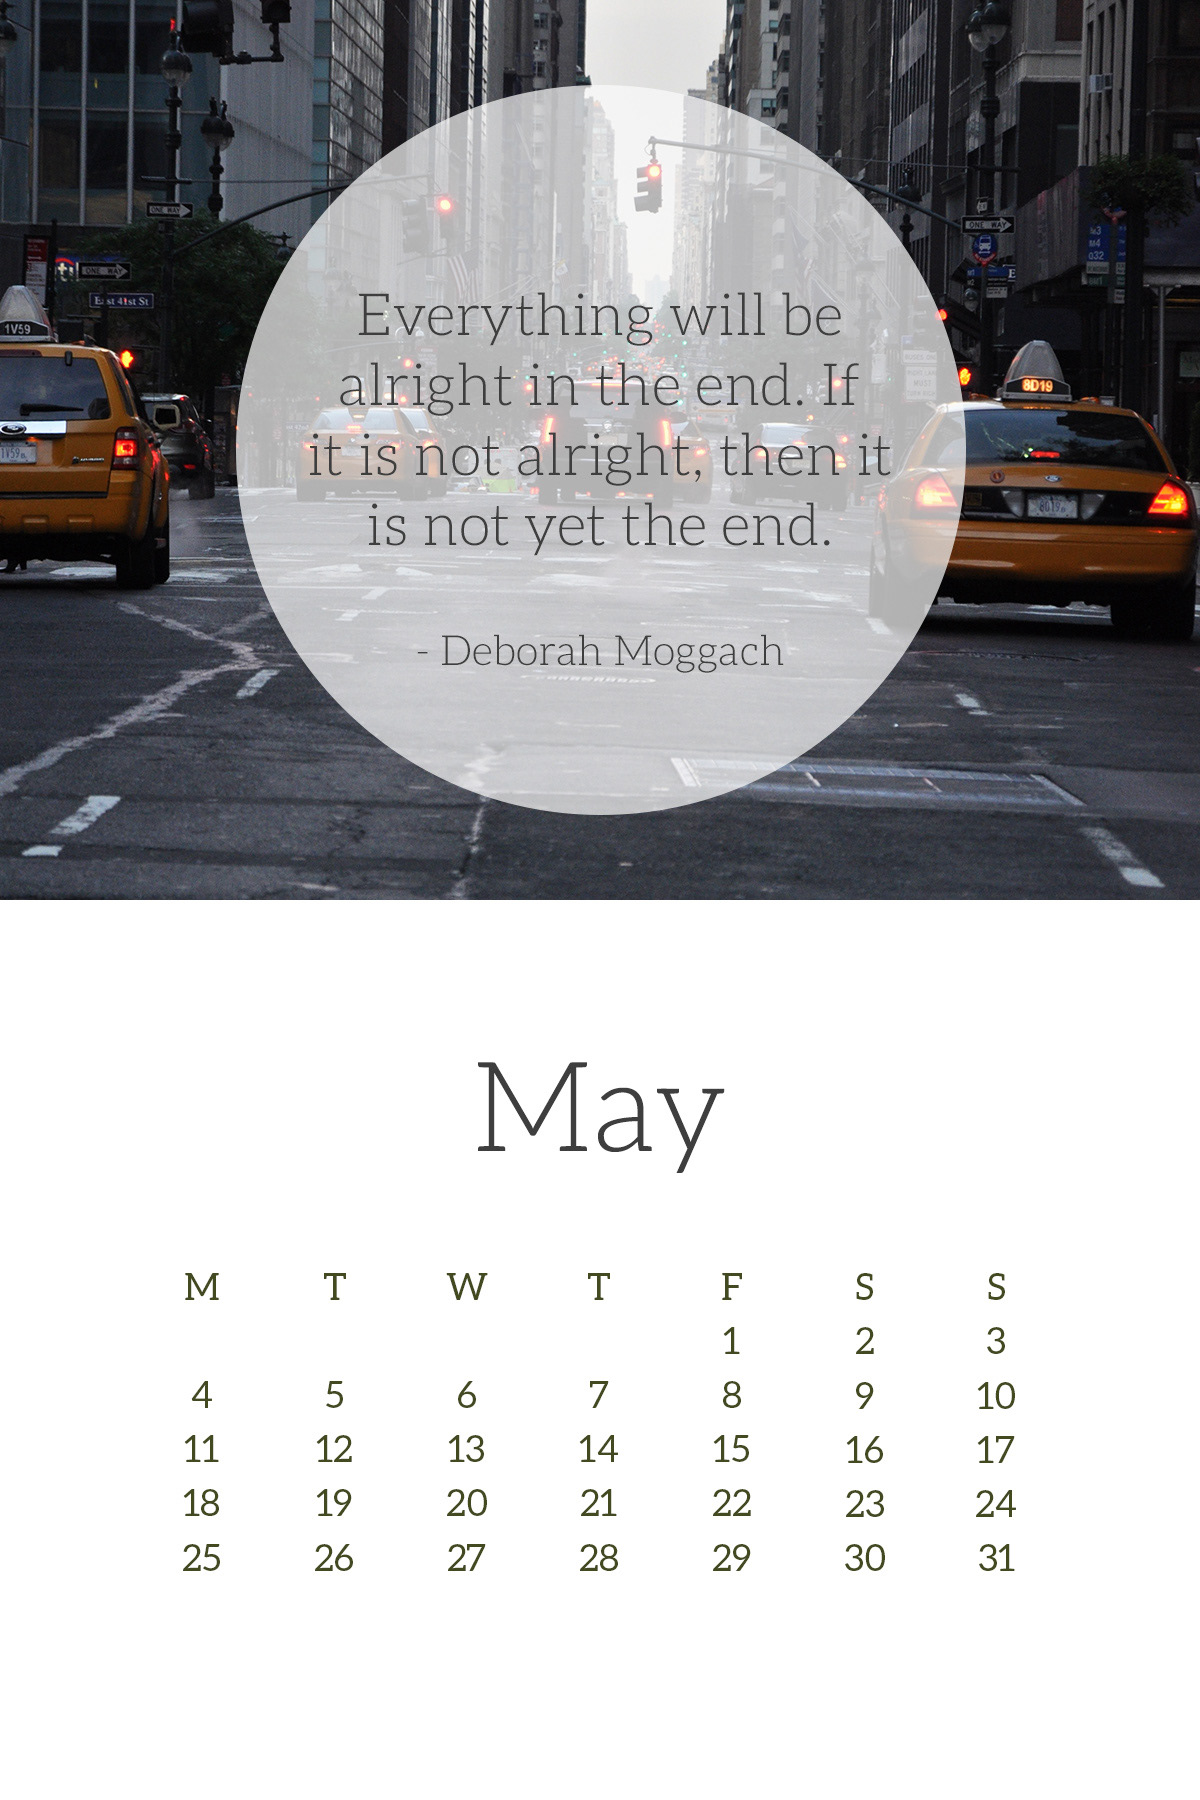 design calendar 2015 Calendar printable calendar inspirational calendar photos Quotes inspiration inspirational quotes